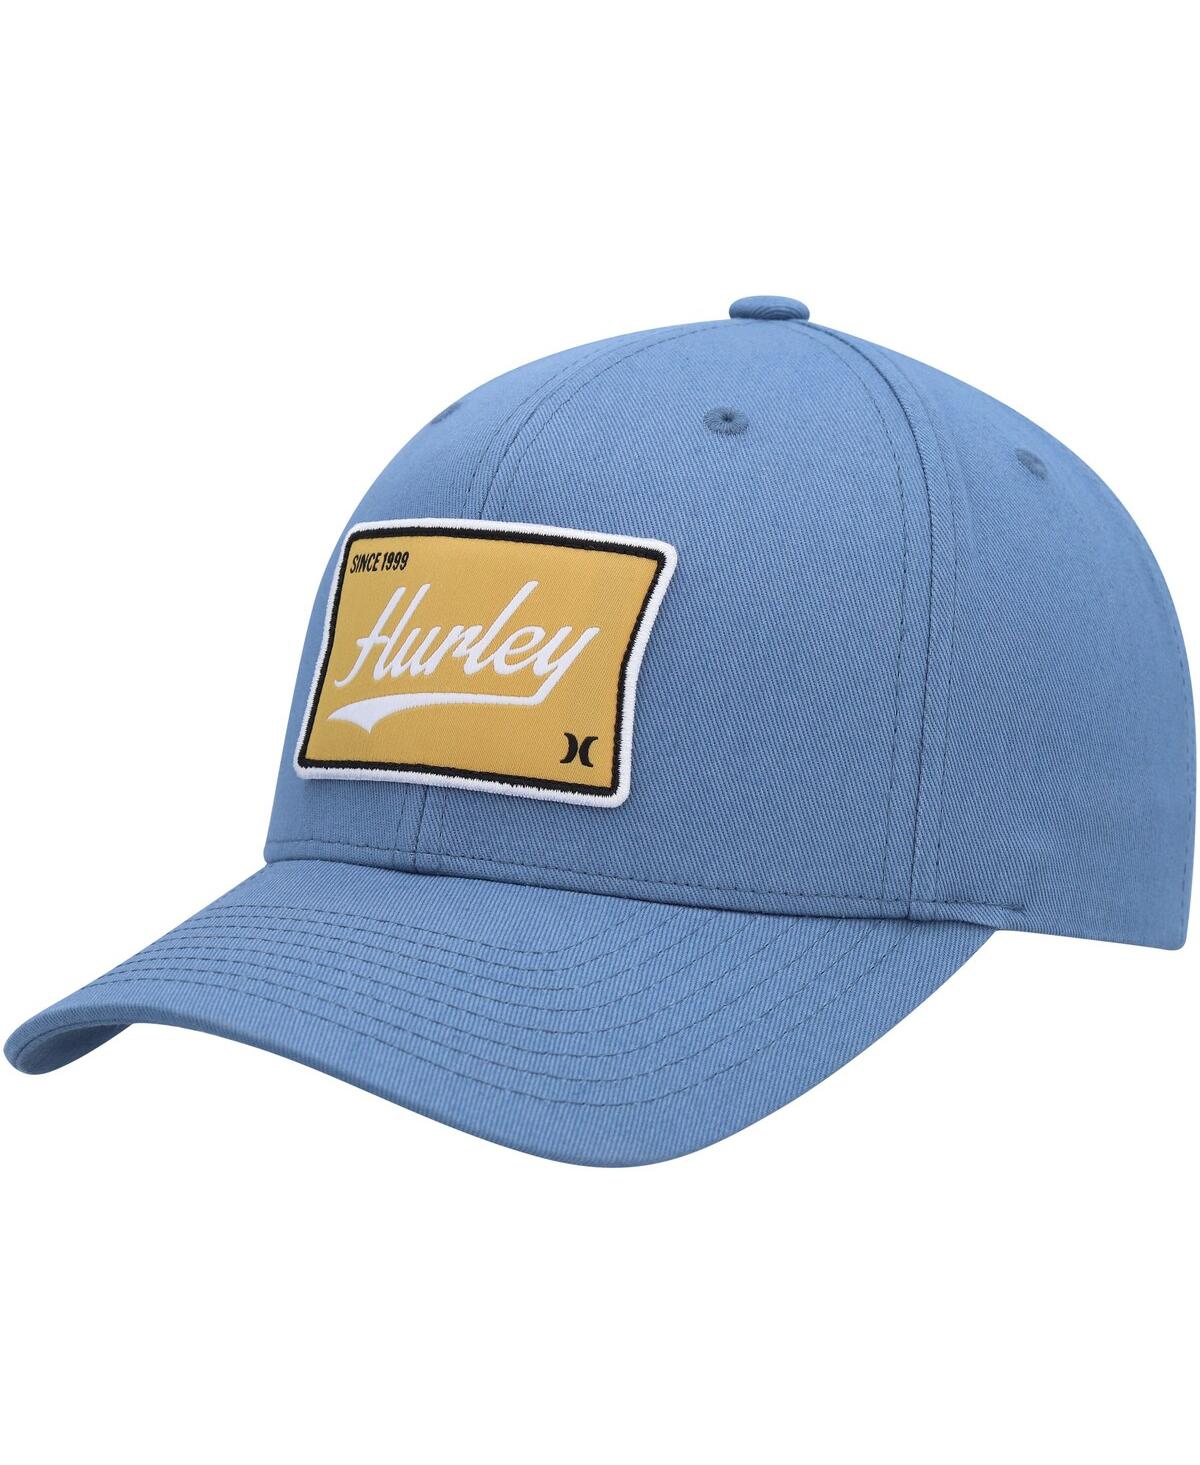 Men's Hurley Blue Casper Snapback Hat - Blue